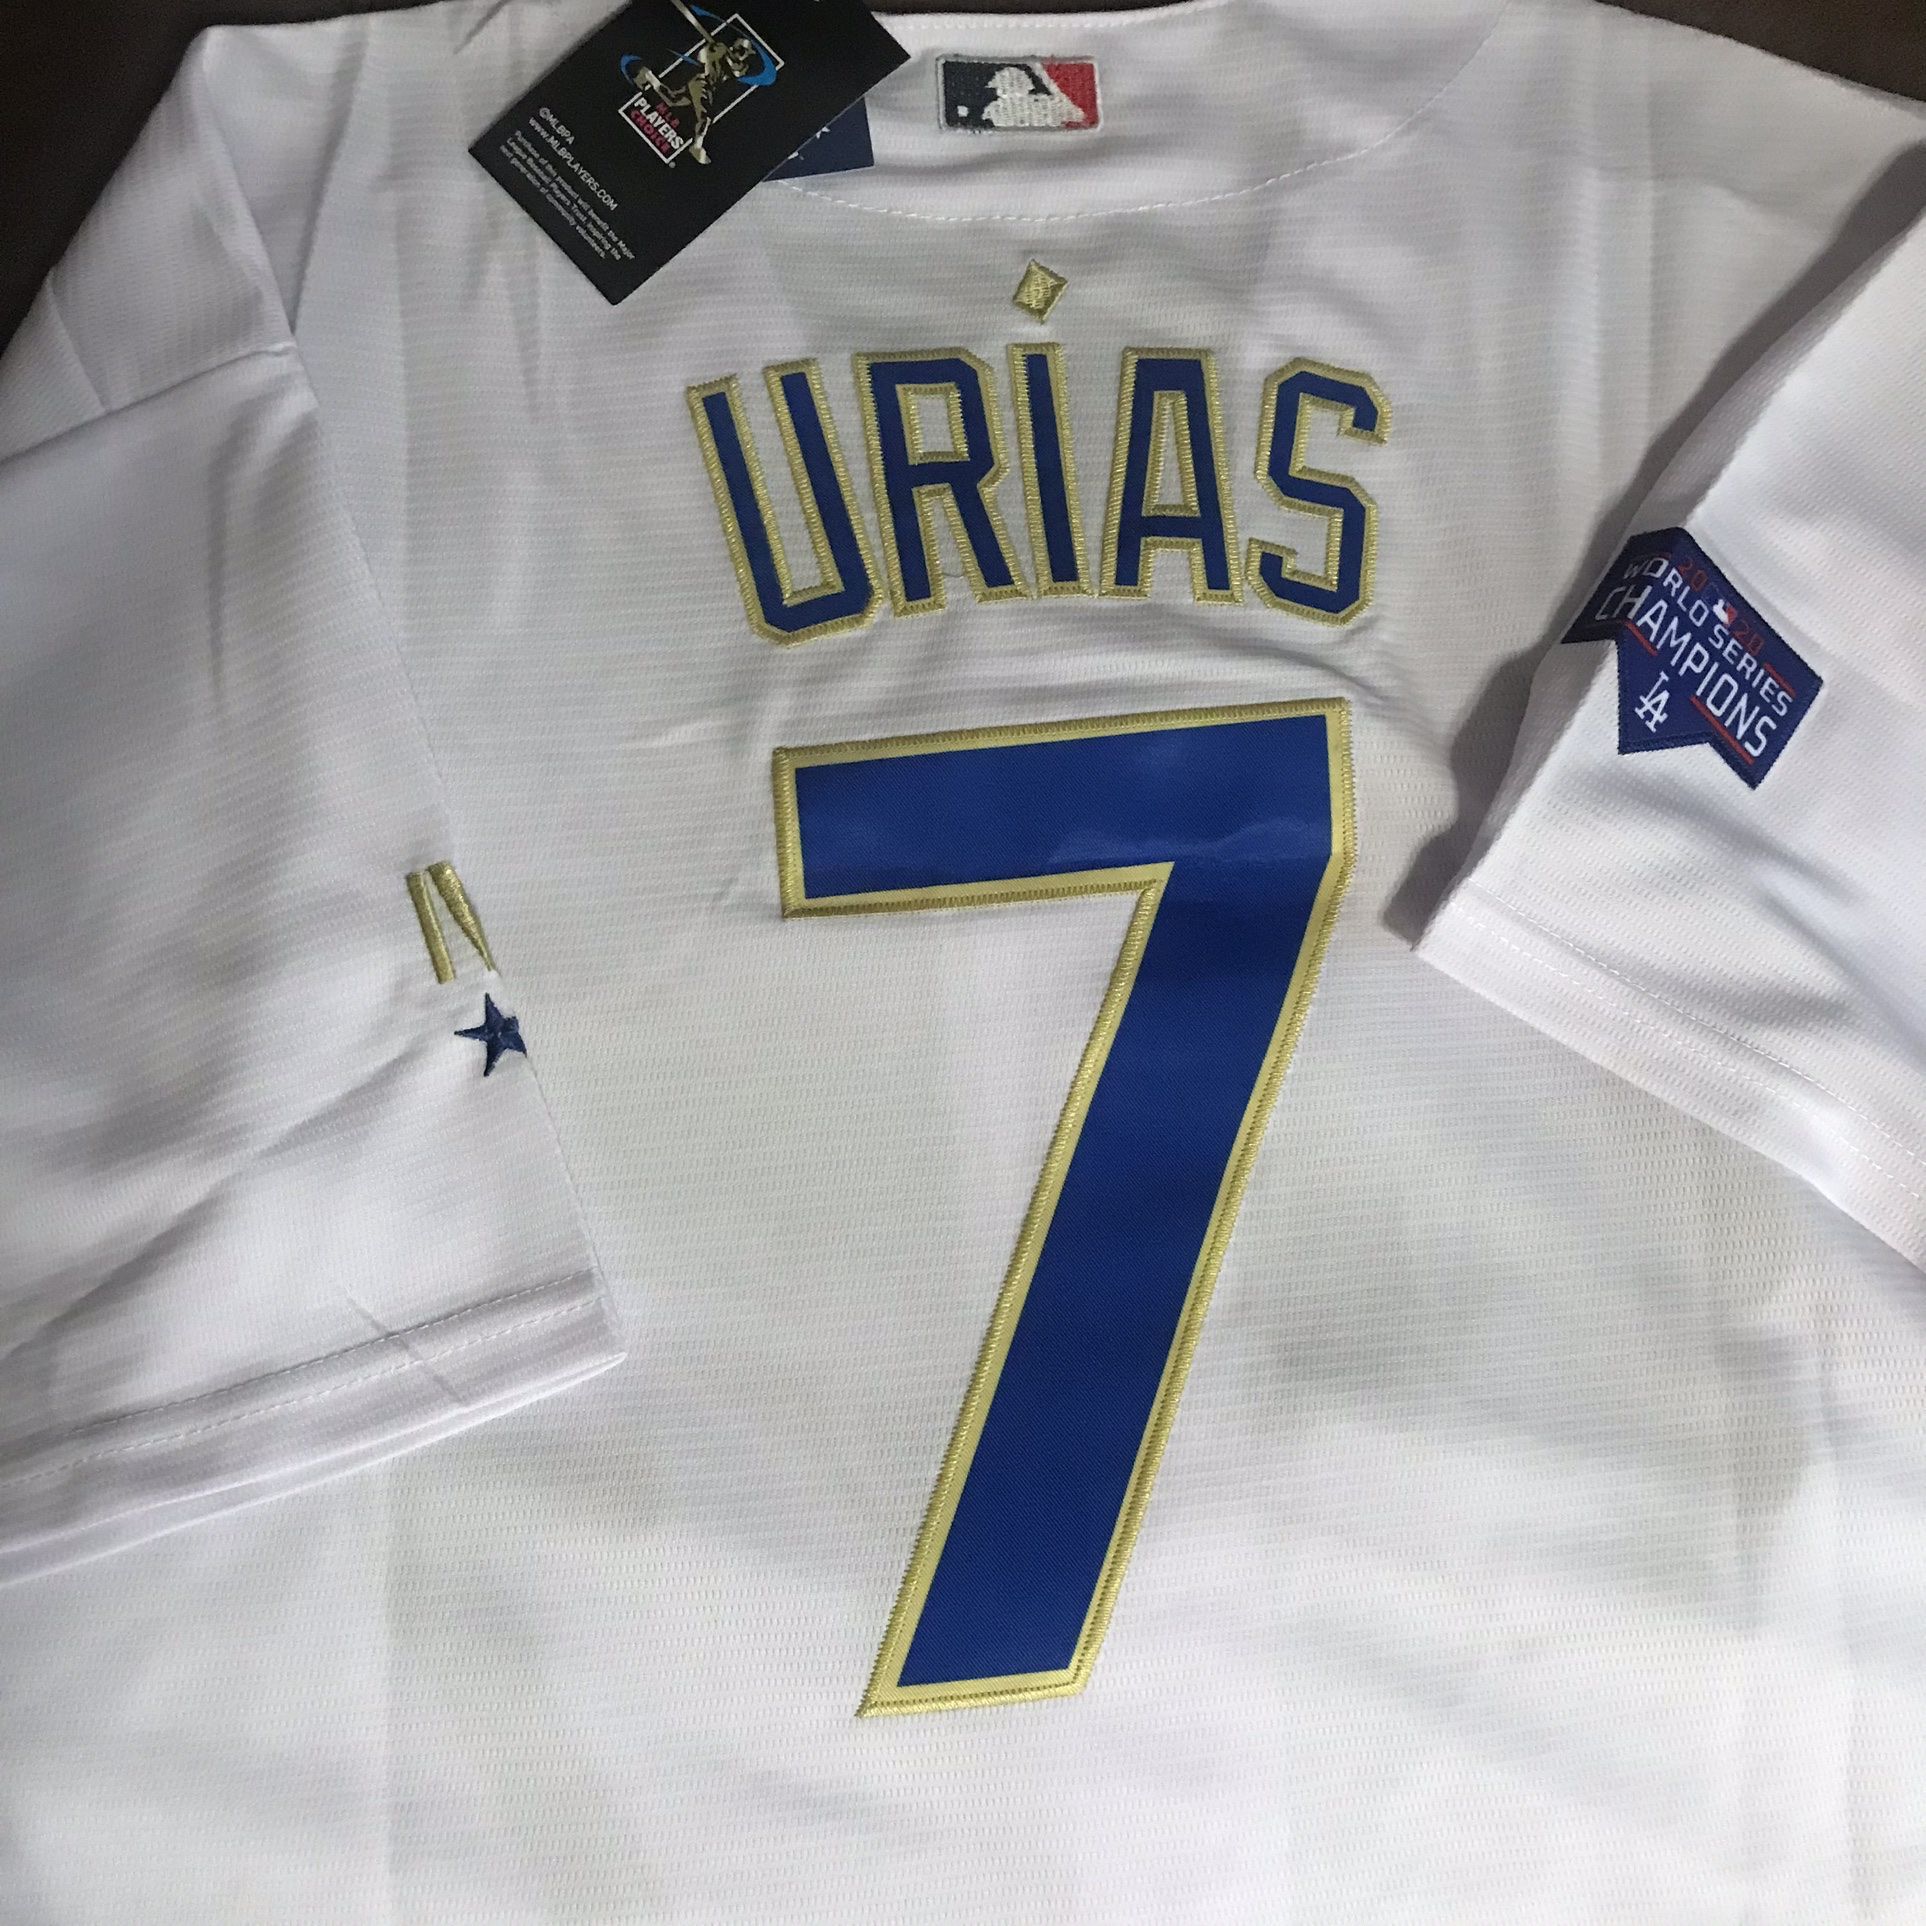 Dodgers Julio Urias Jersey for Sale in Ontario, CA - OfferUp